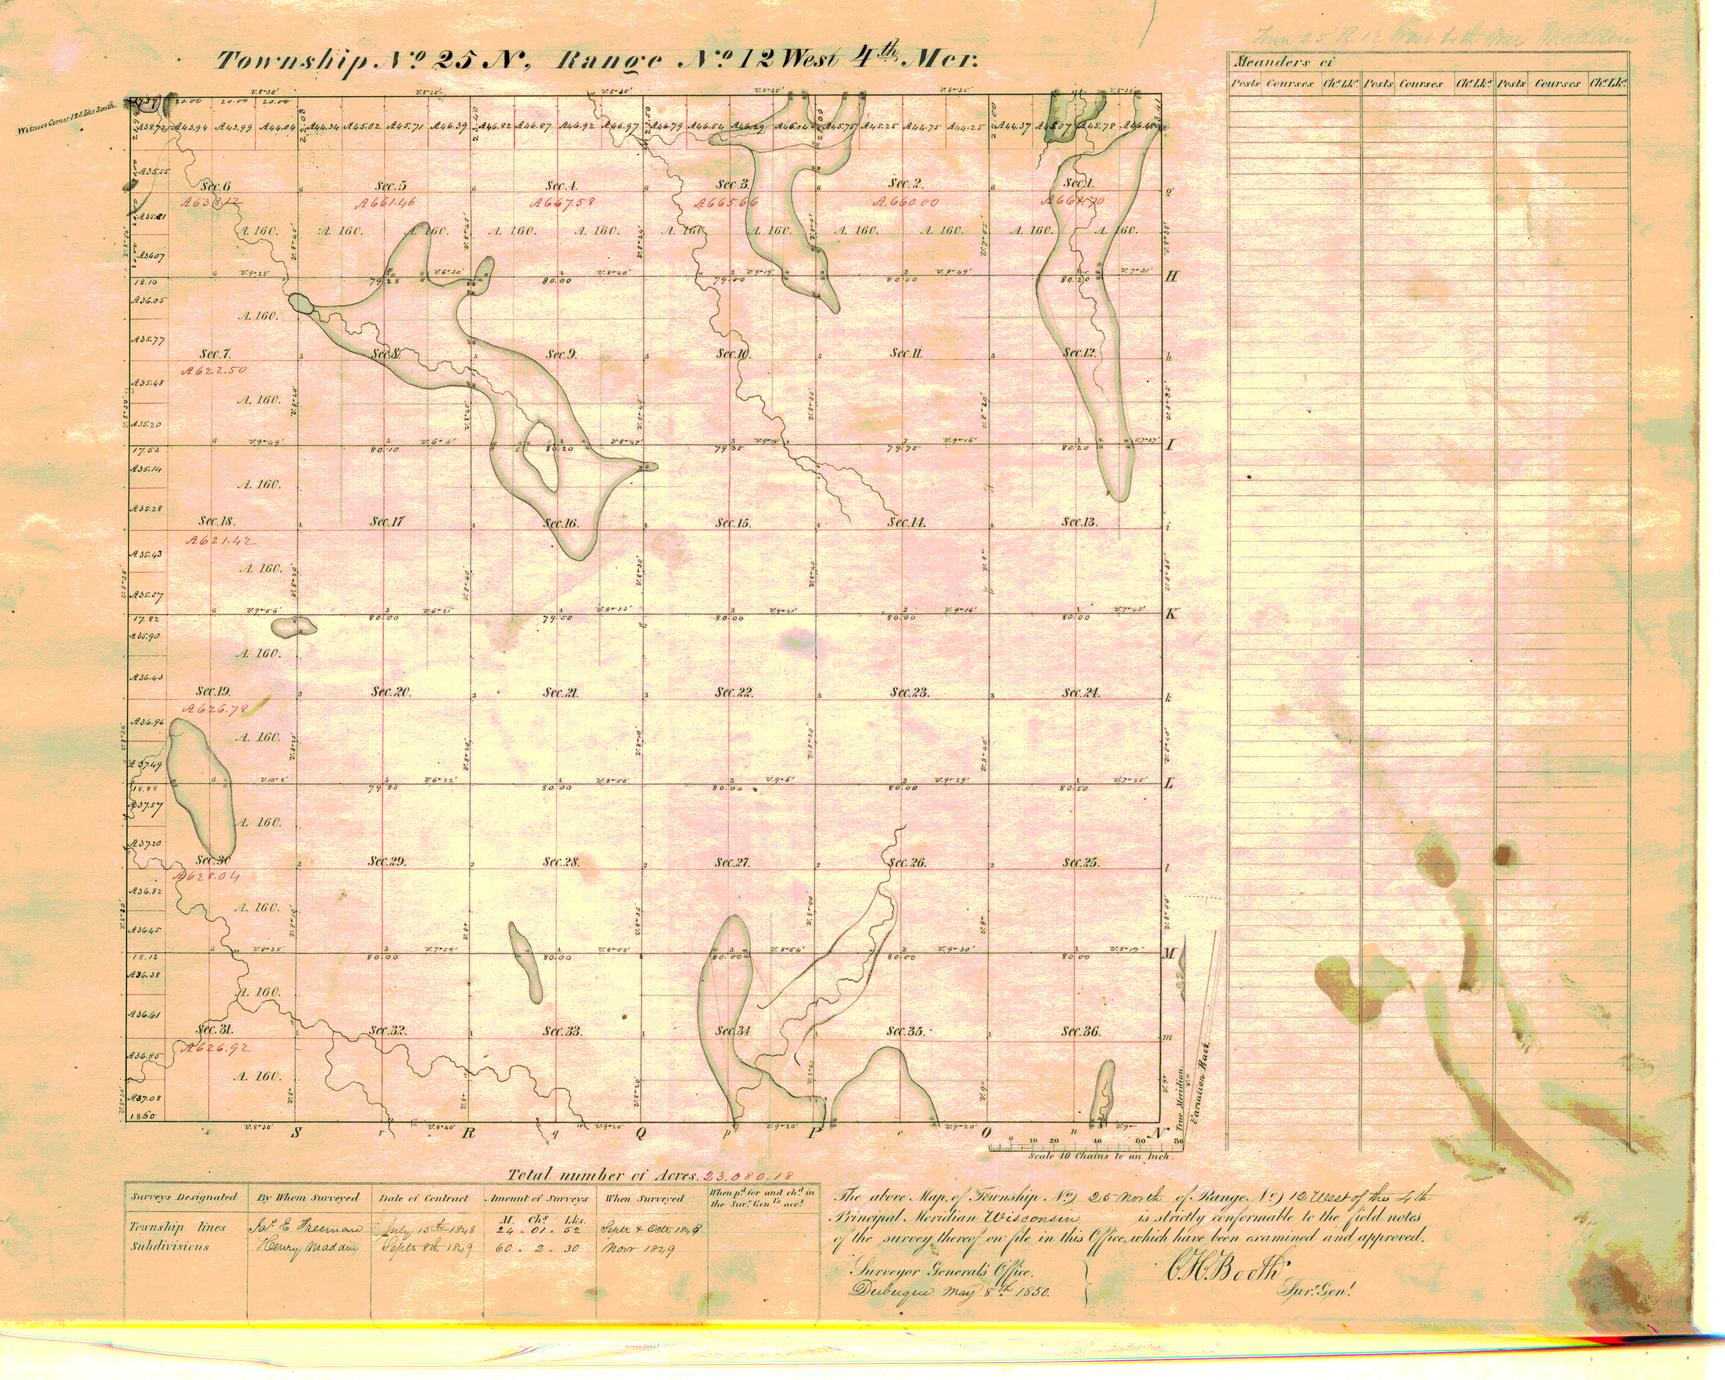 [Public Land Survey System map: Wisconsin Township 25 North, Range 12 West]